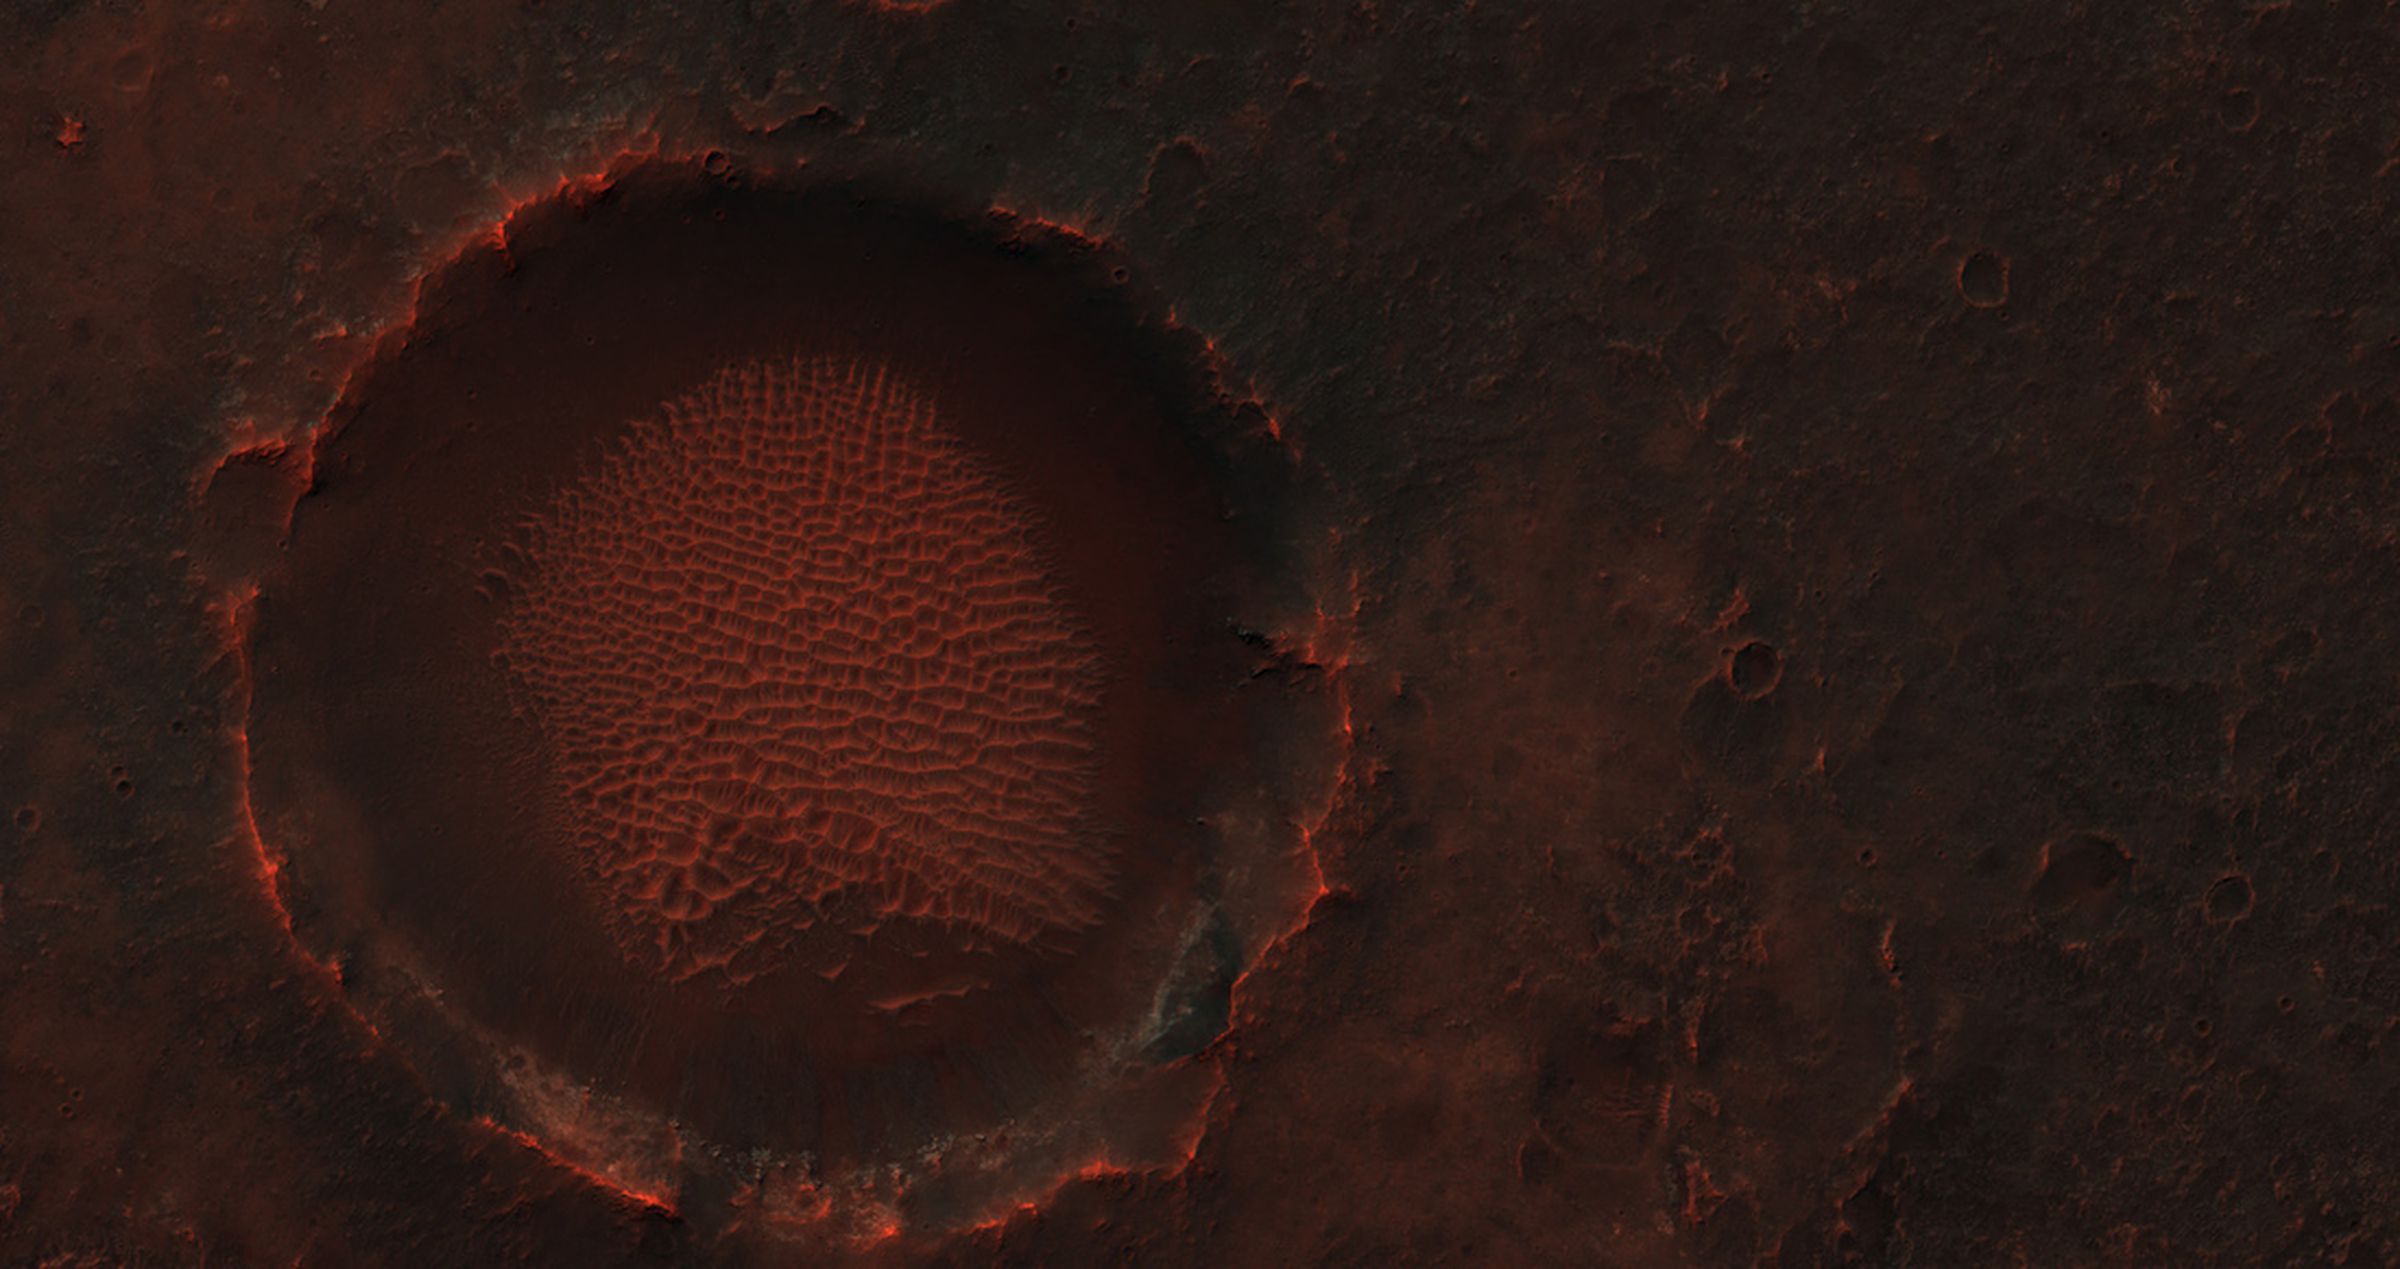 Mars HiRISE images